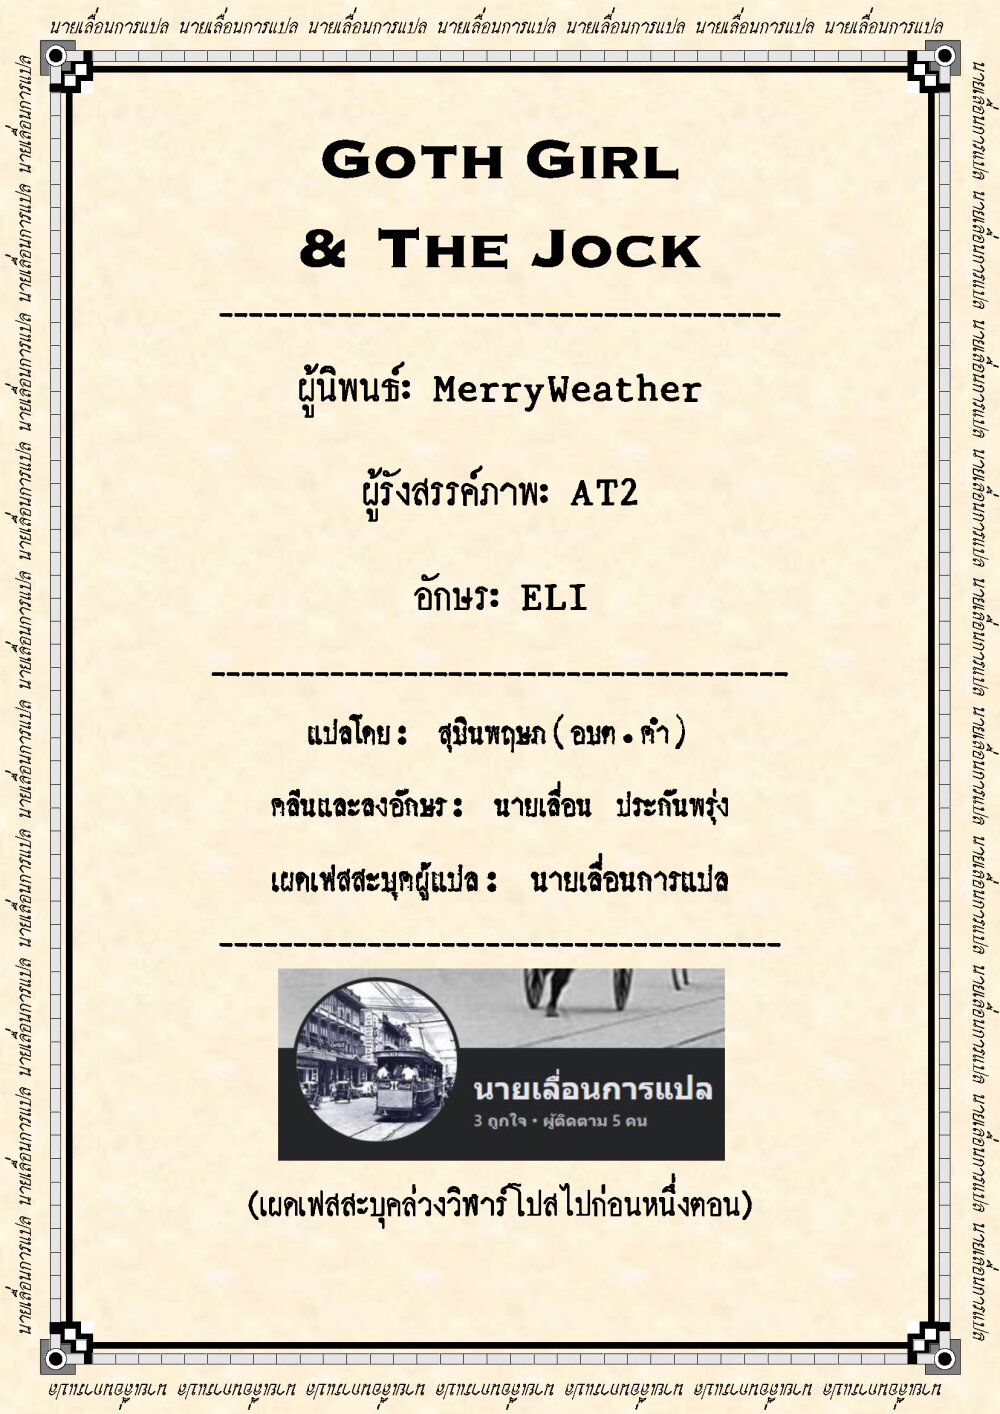 Goth Girl & The Jock 19 12